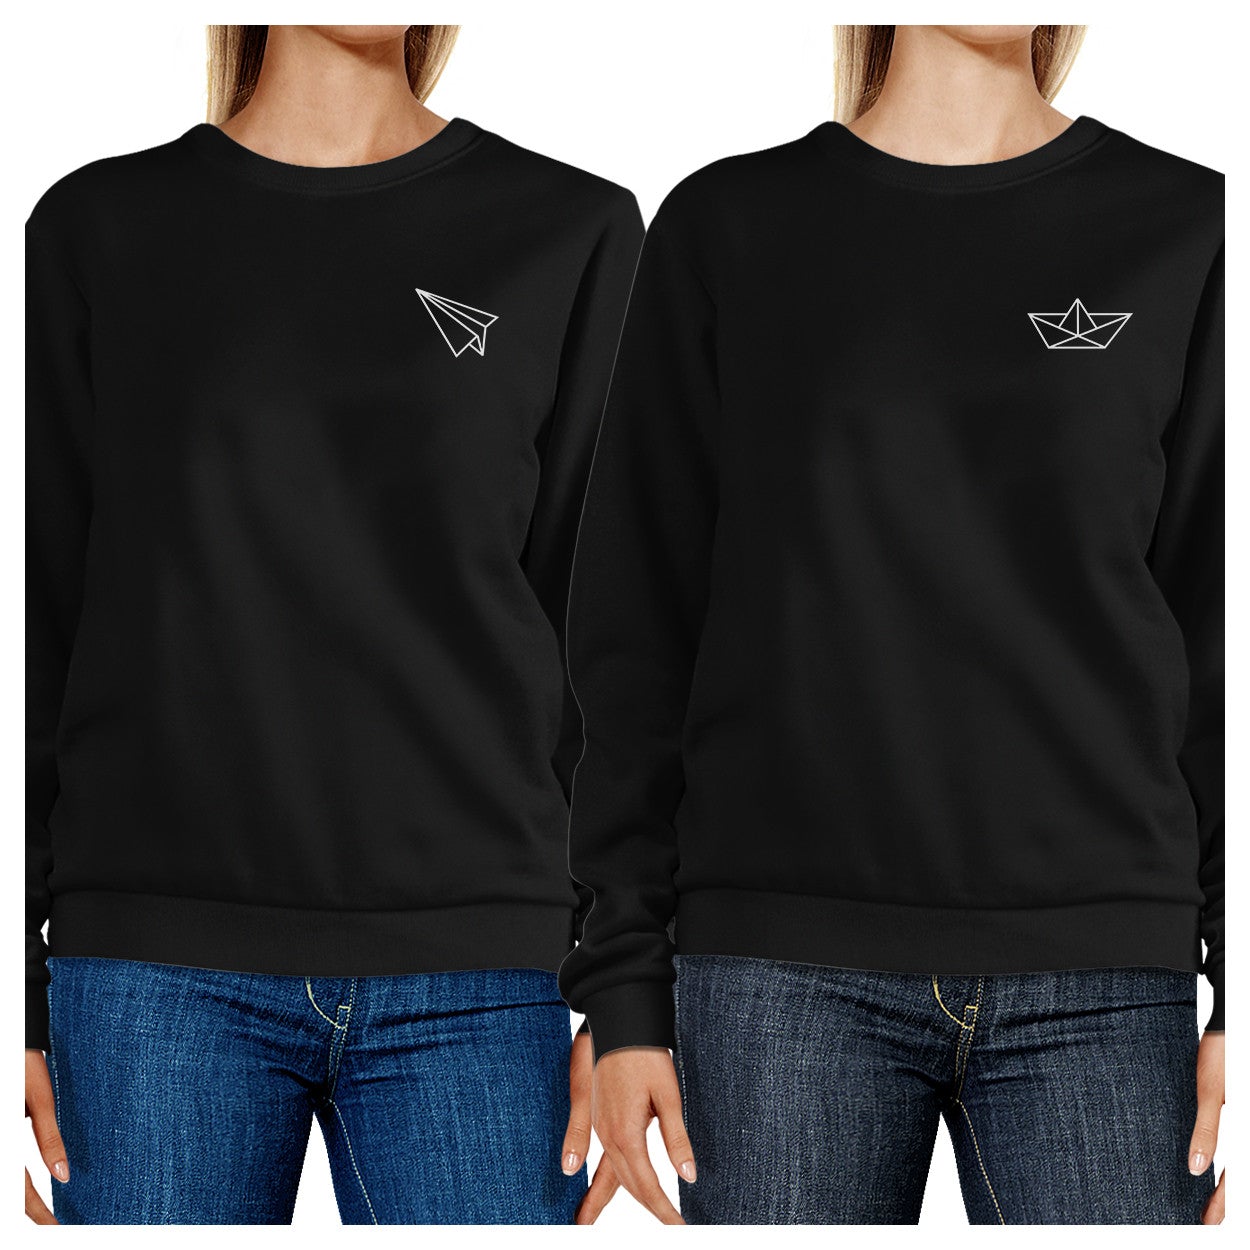 Origami Plane And Boat BFF Matching Black Sweatshirts